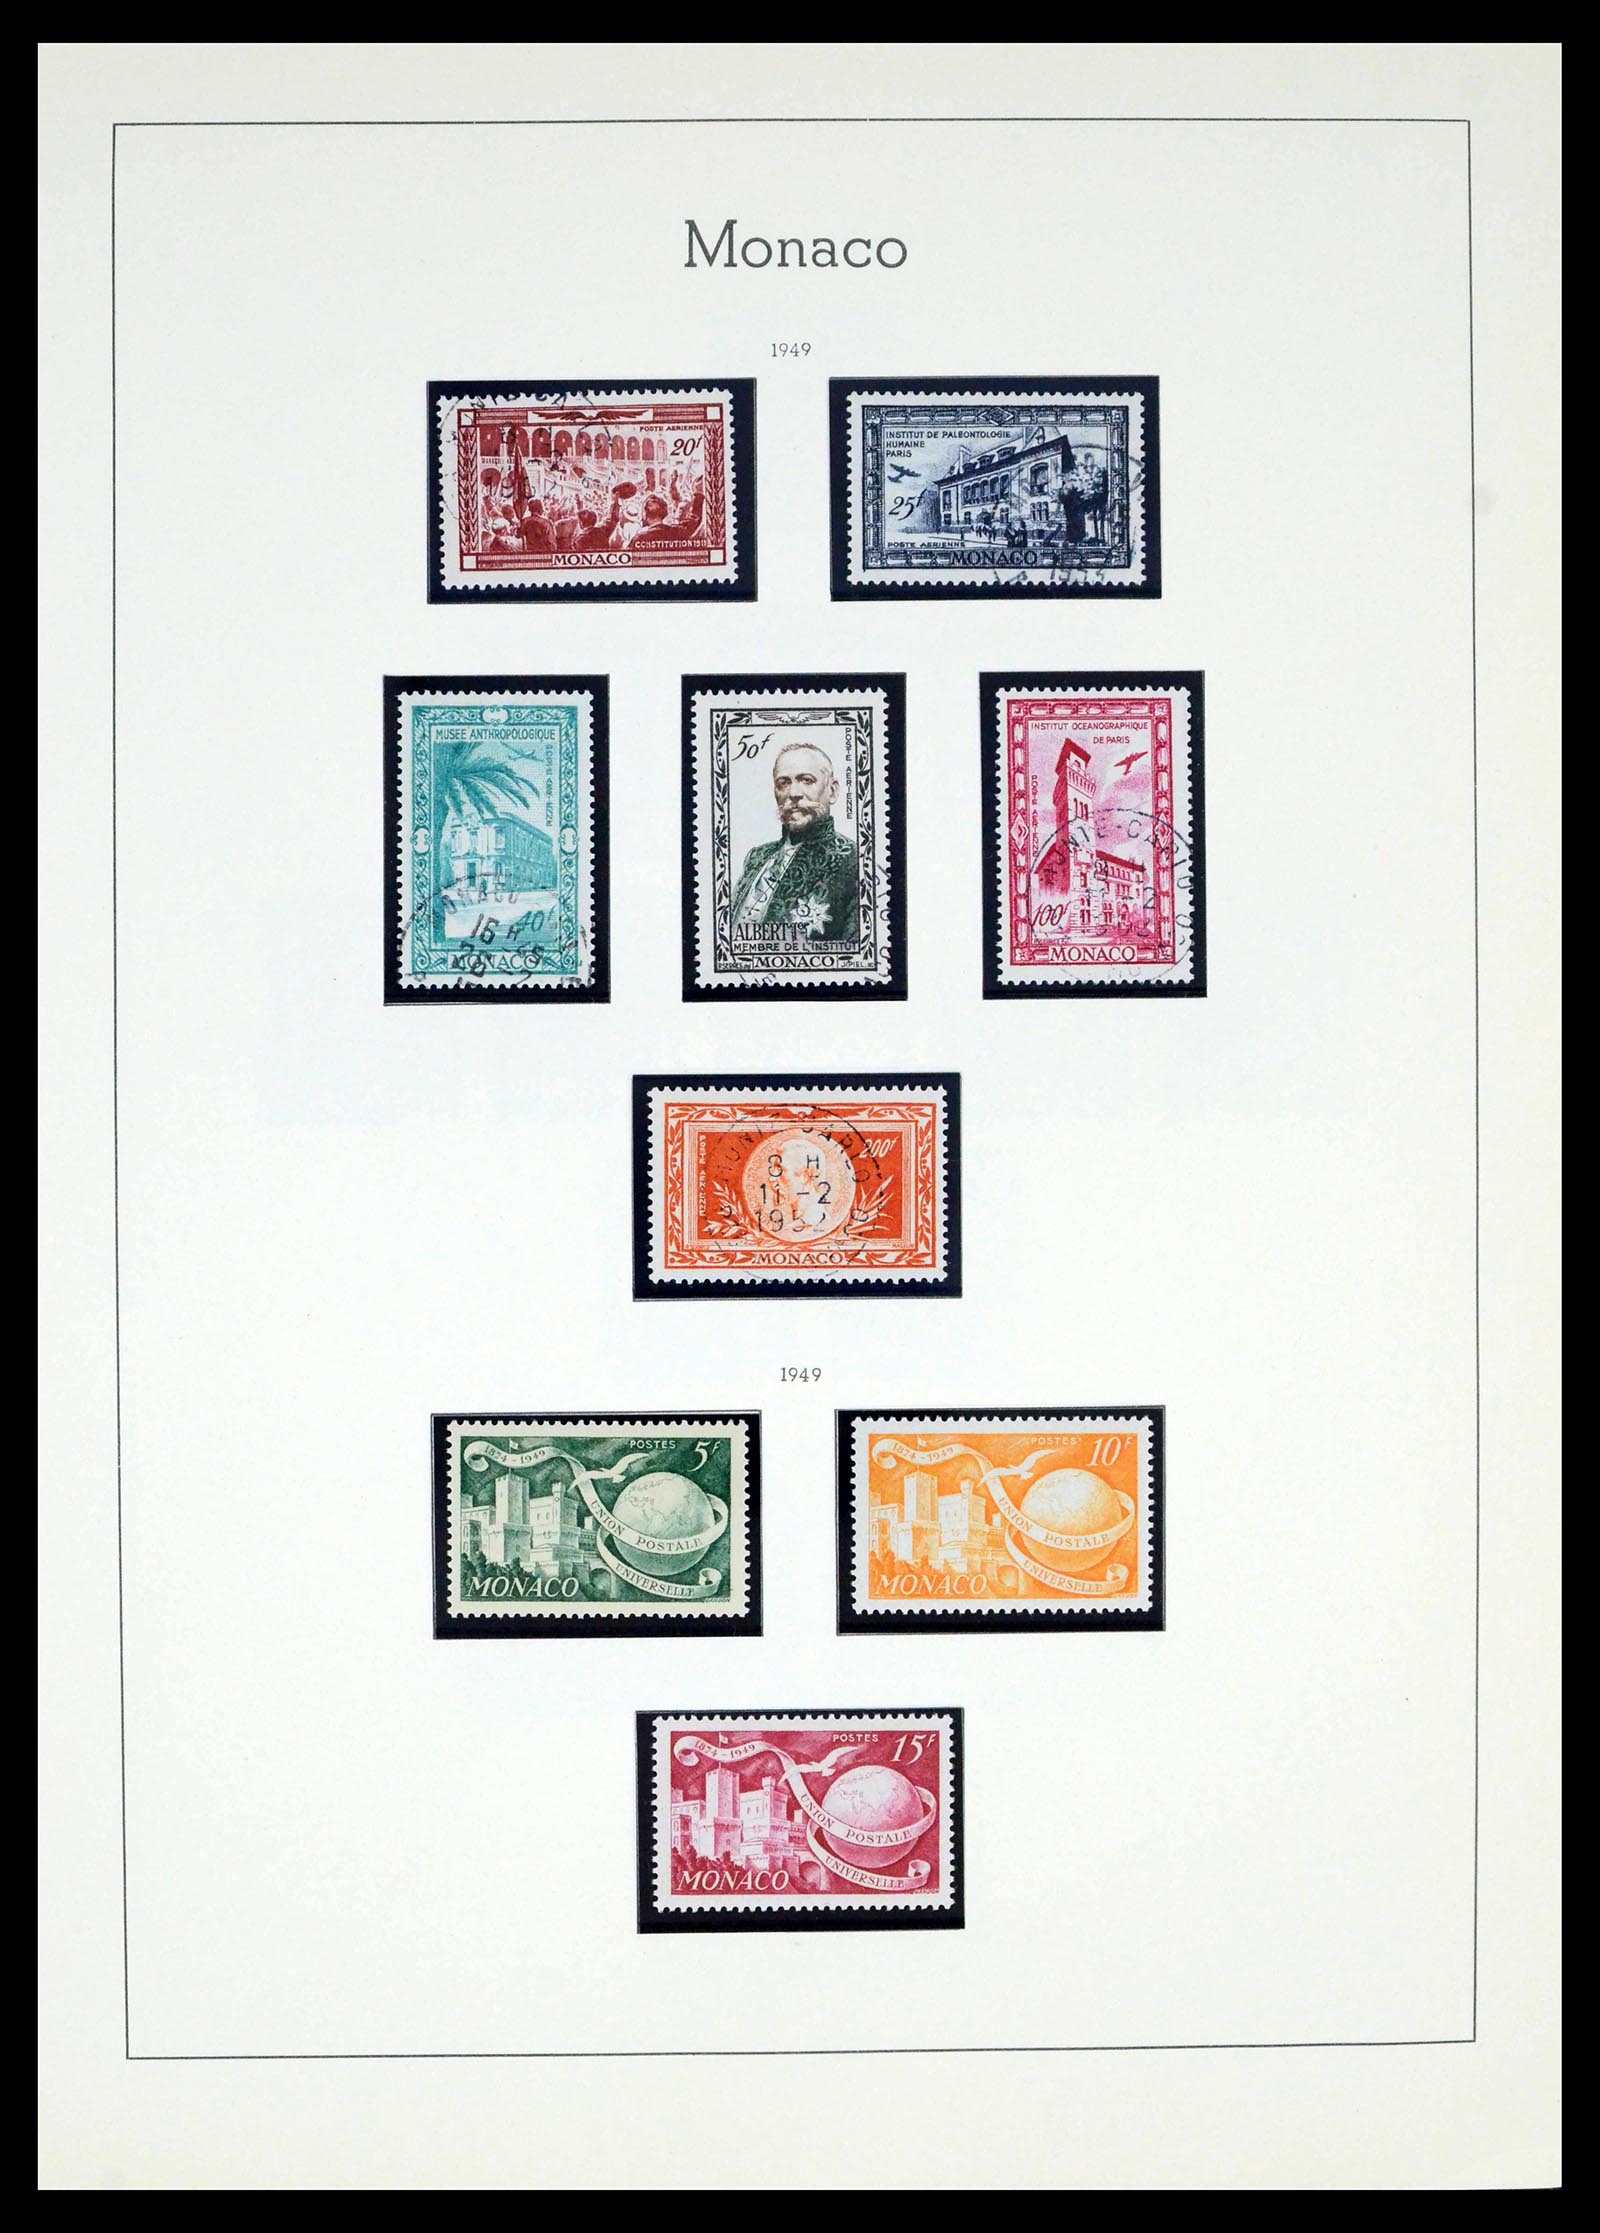 39392 0032 - Stamp collection 39392 Monaco 1885-1999.